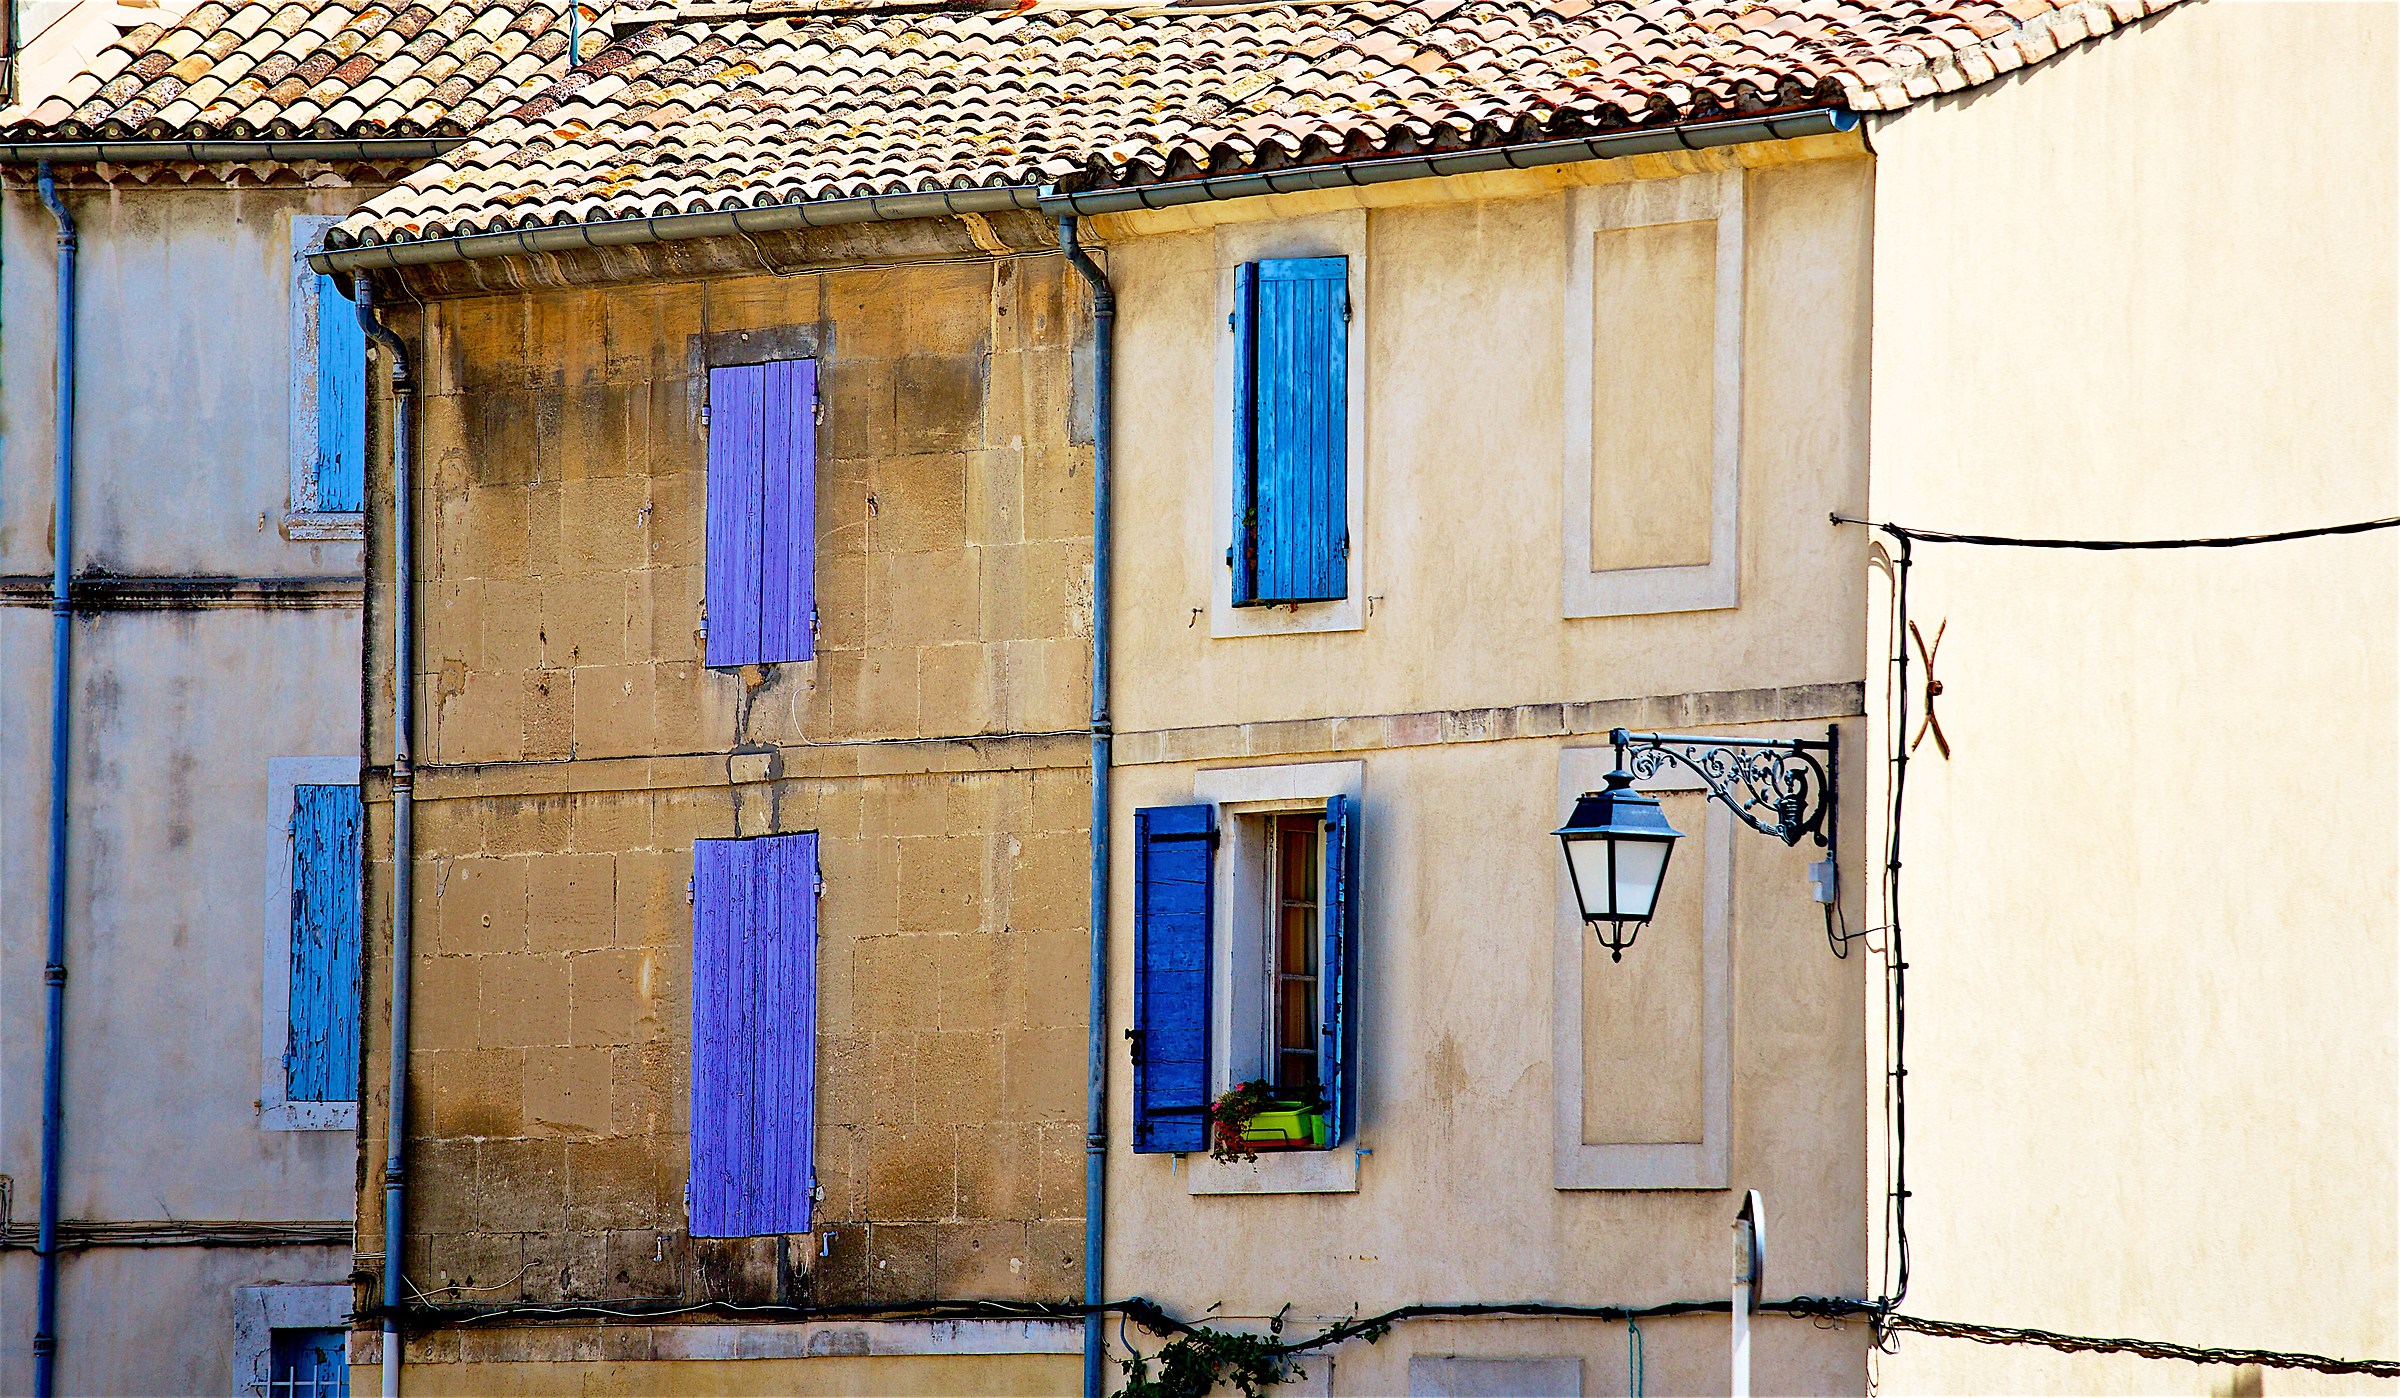 Provence...